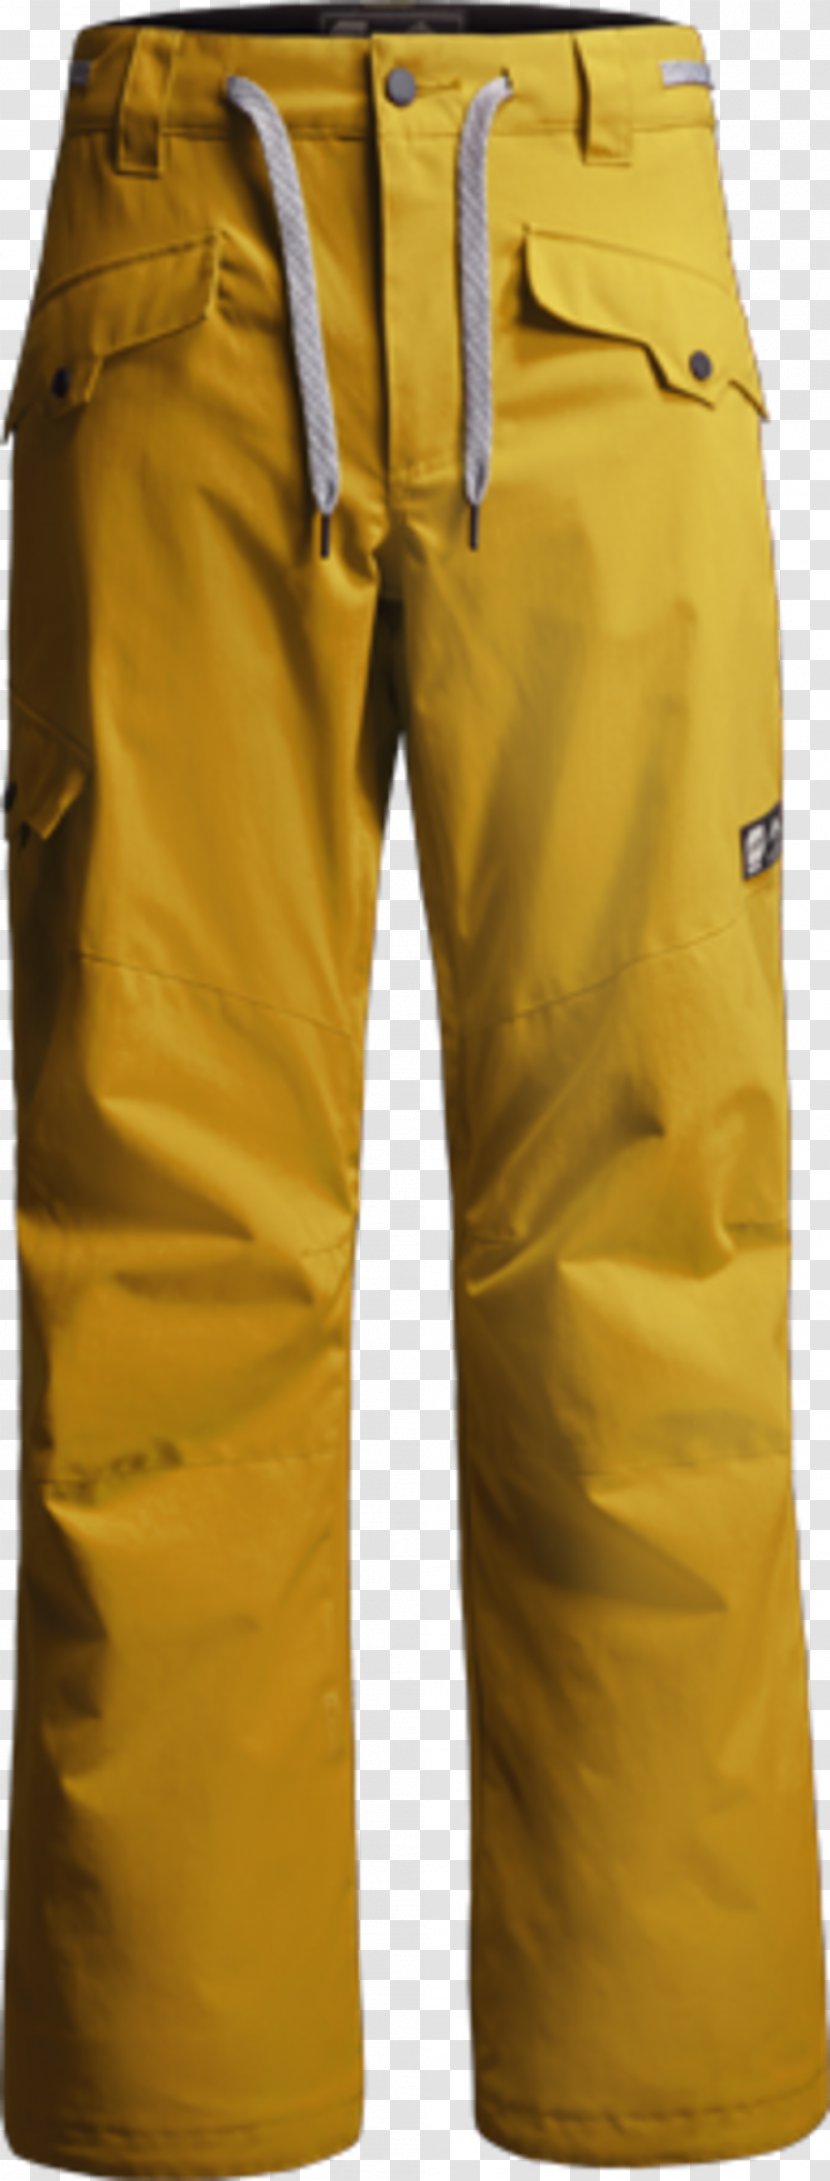 Bermuda Shorts Pants - Active - Trousers Transparent PNG